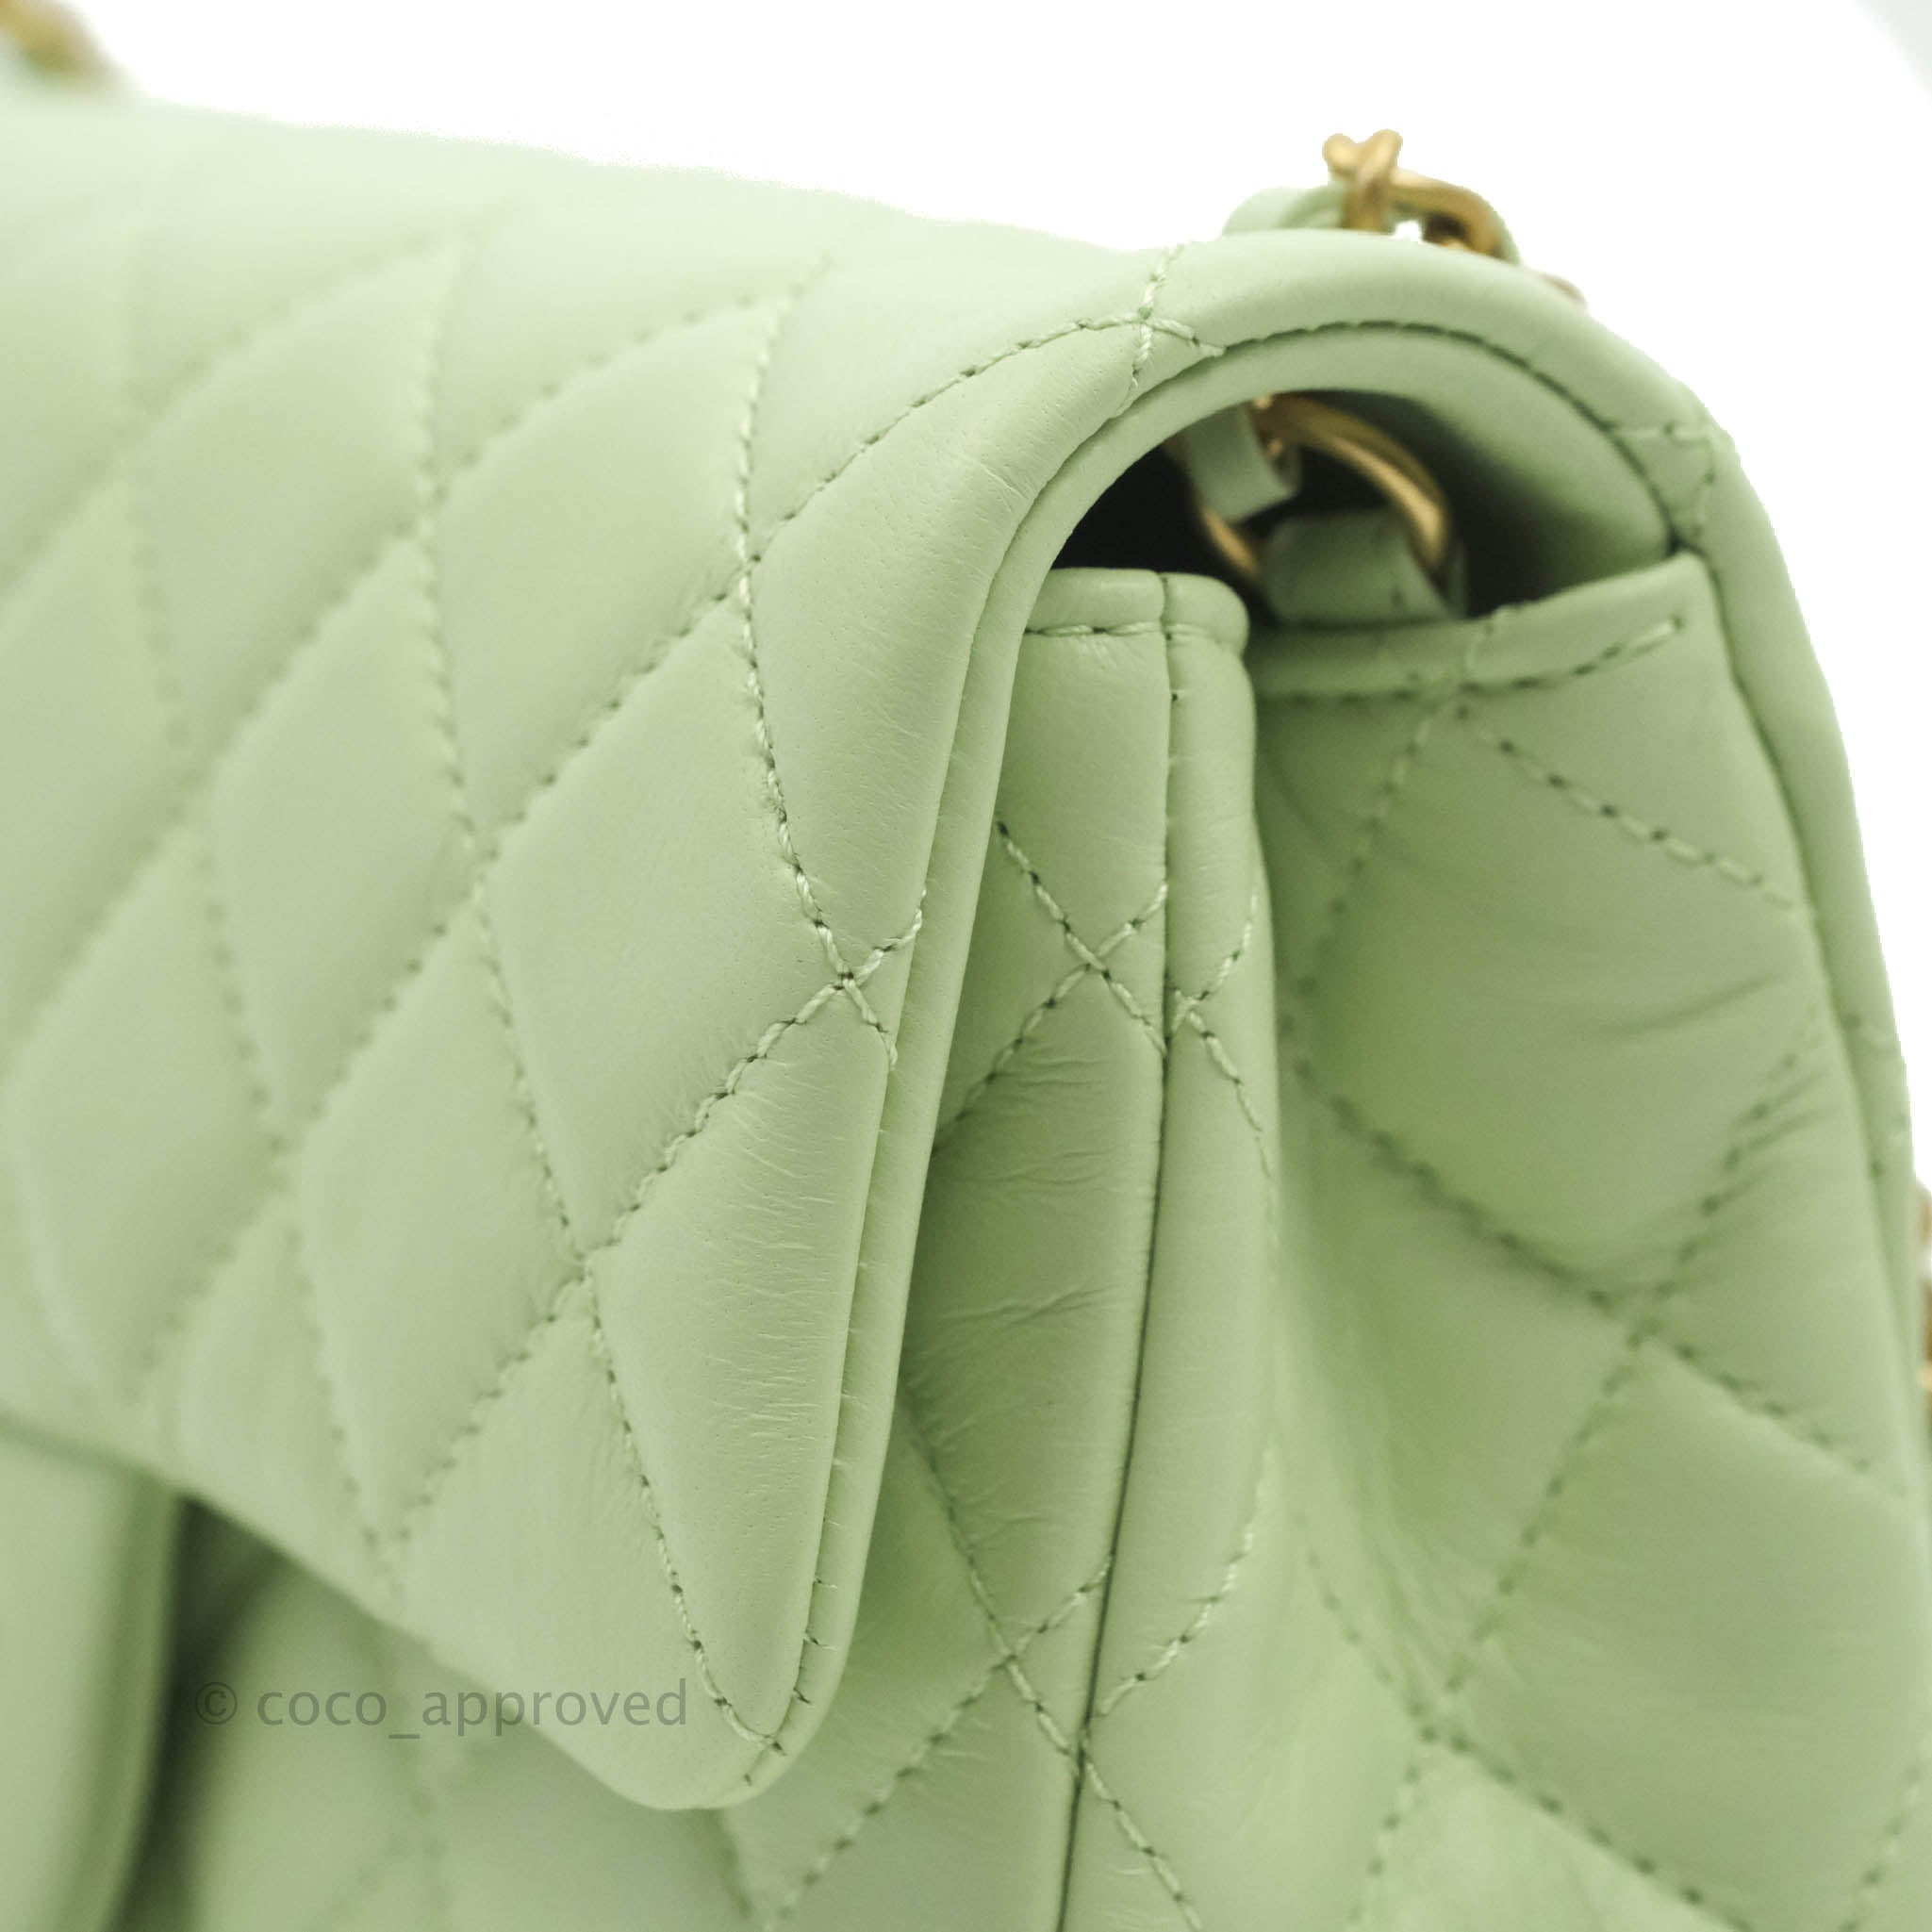 Chanel Mini Rectangular Pearl Crush Avocado Green Lambskin Aged